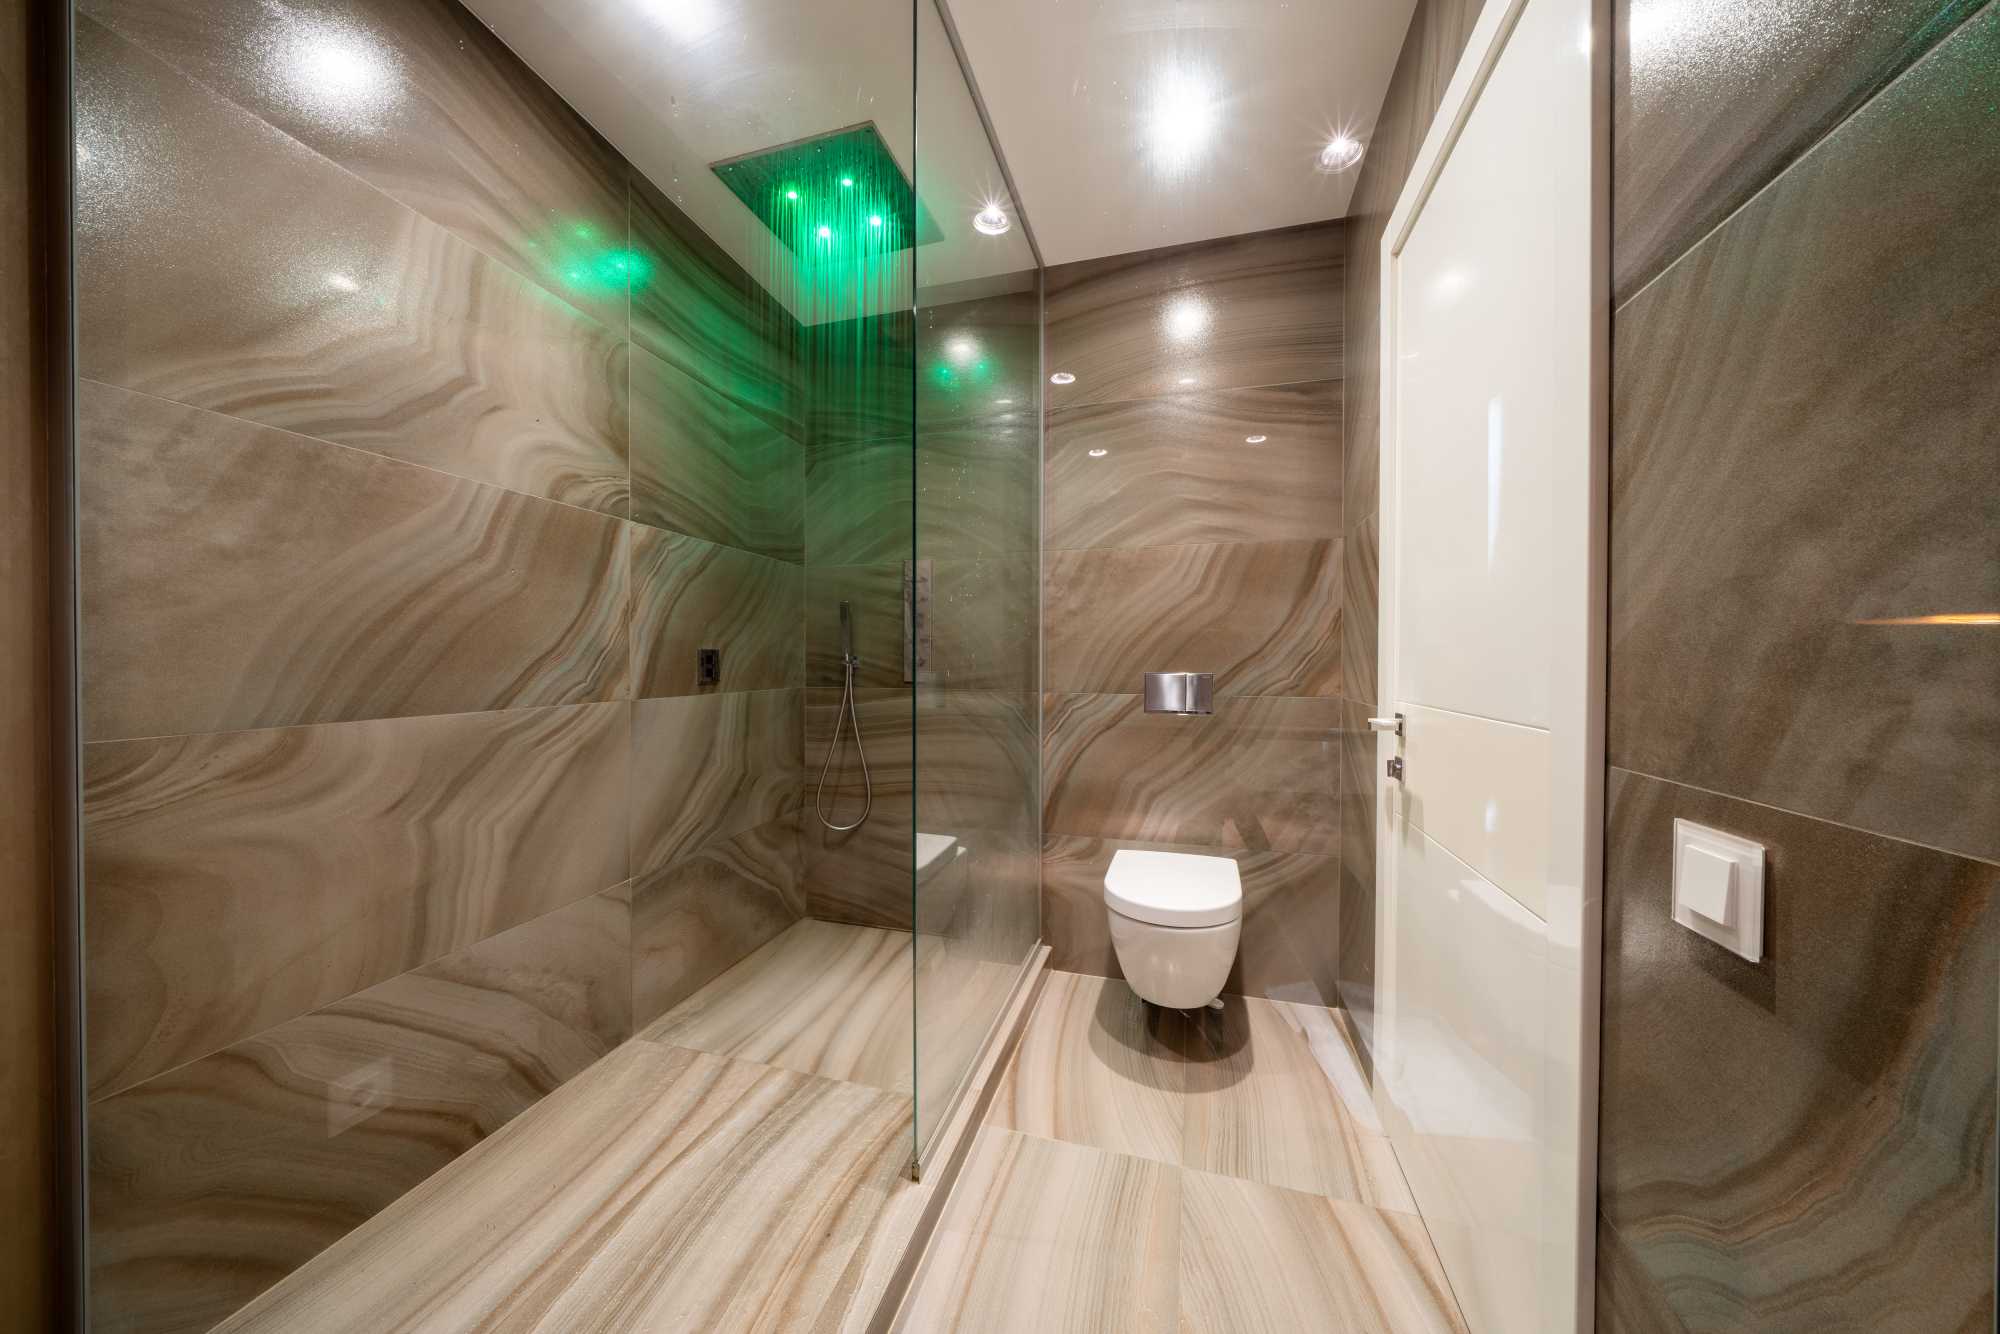 Minimalist Design in a Contemporary Bathroom